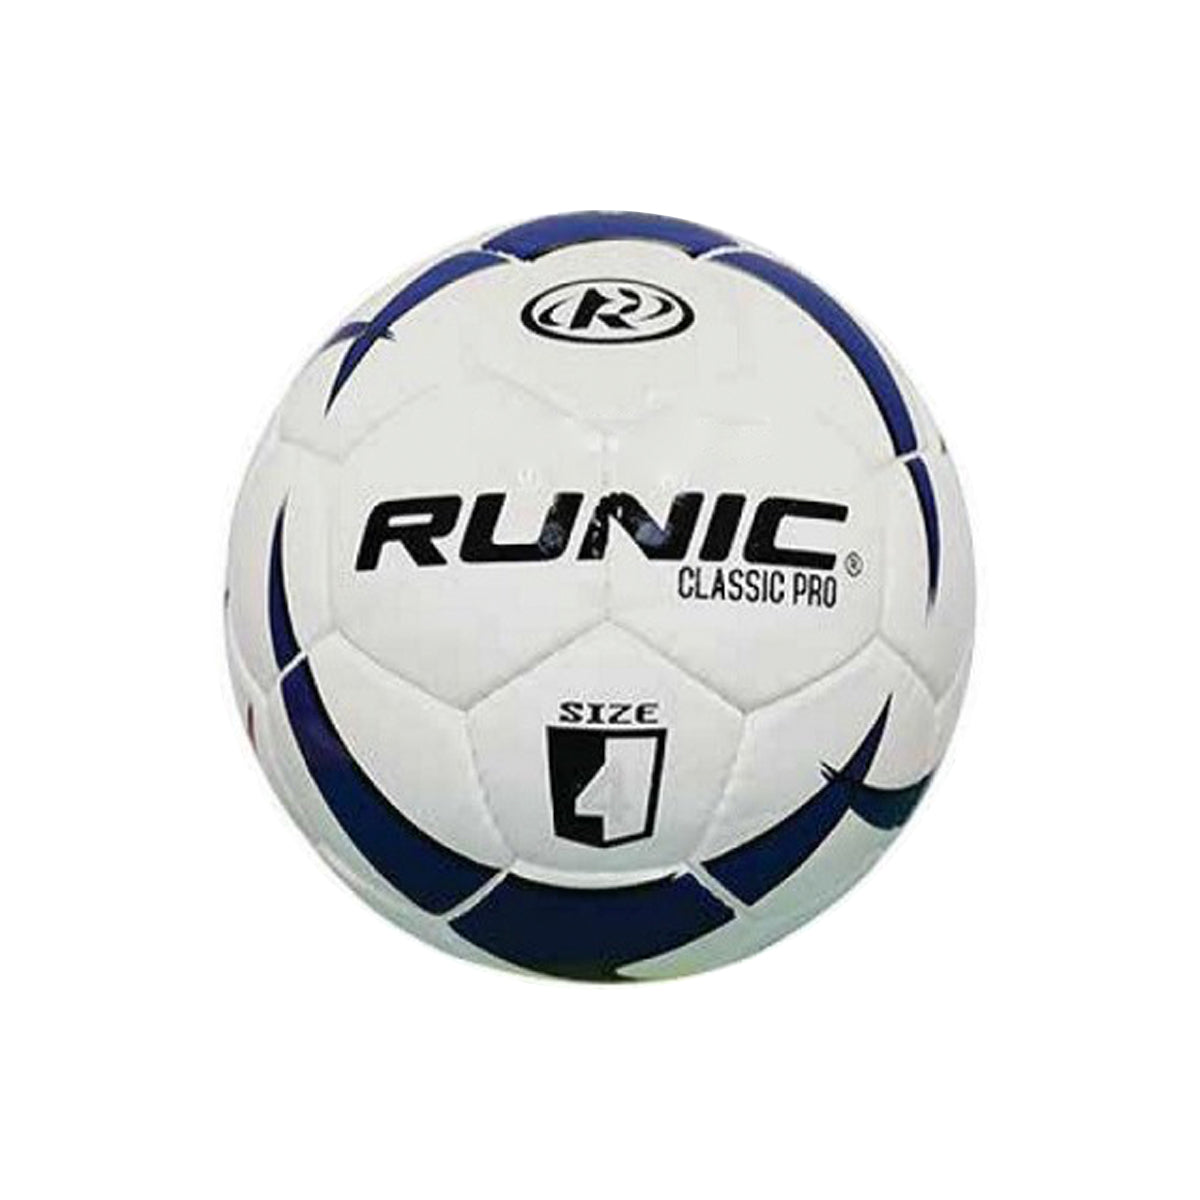 Balon Futbol Classic Pro #4. Runic